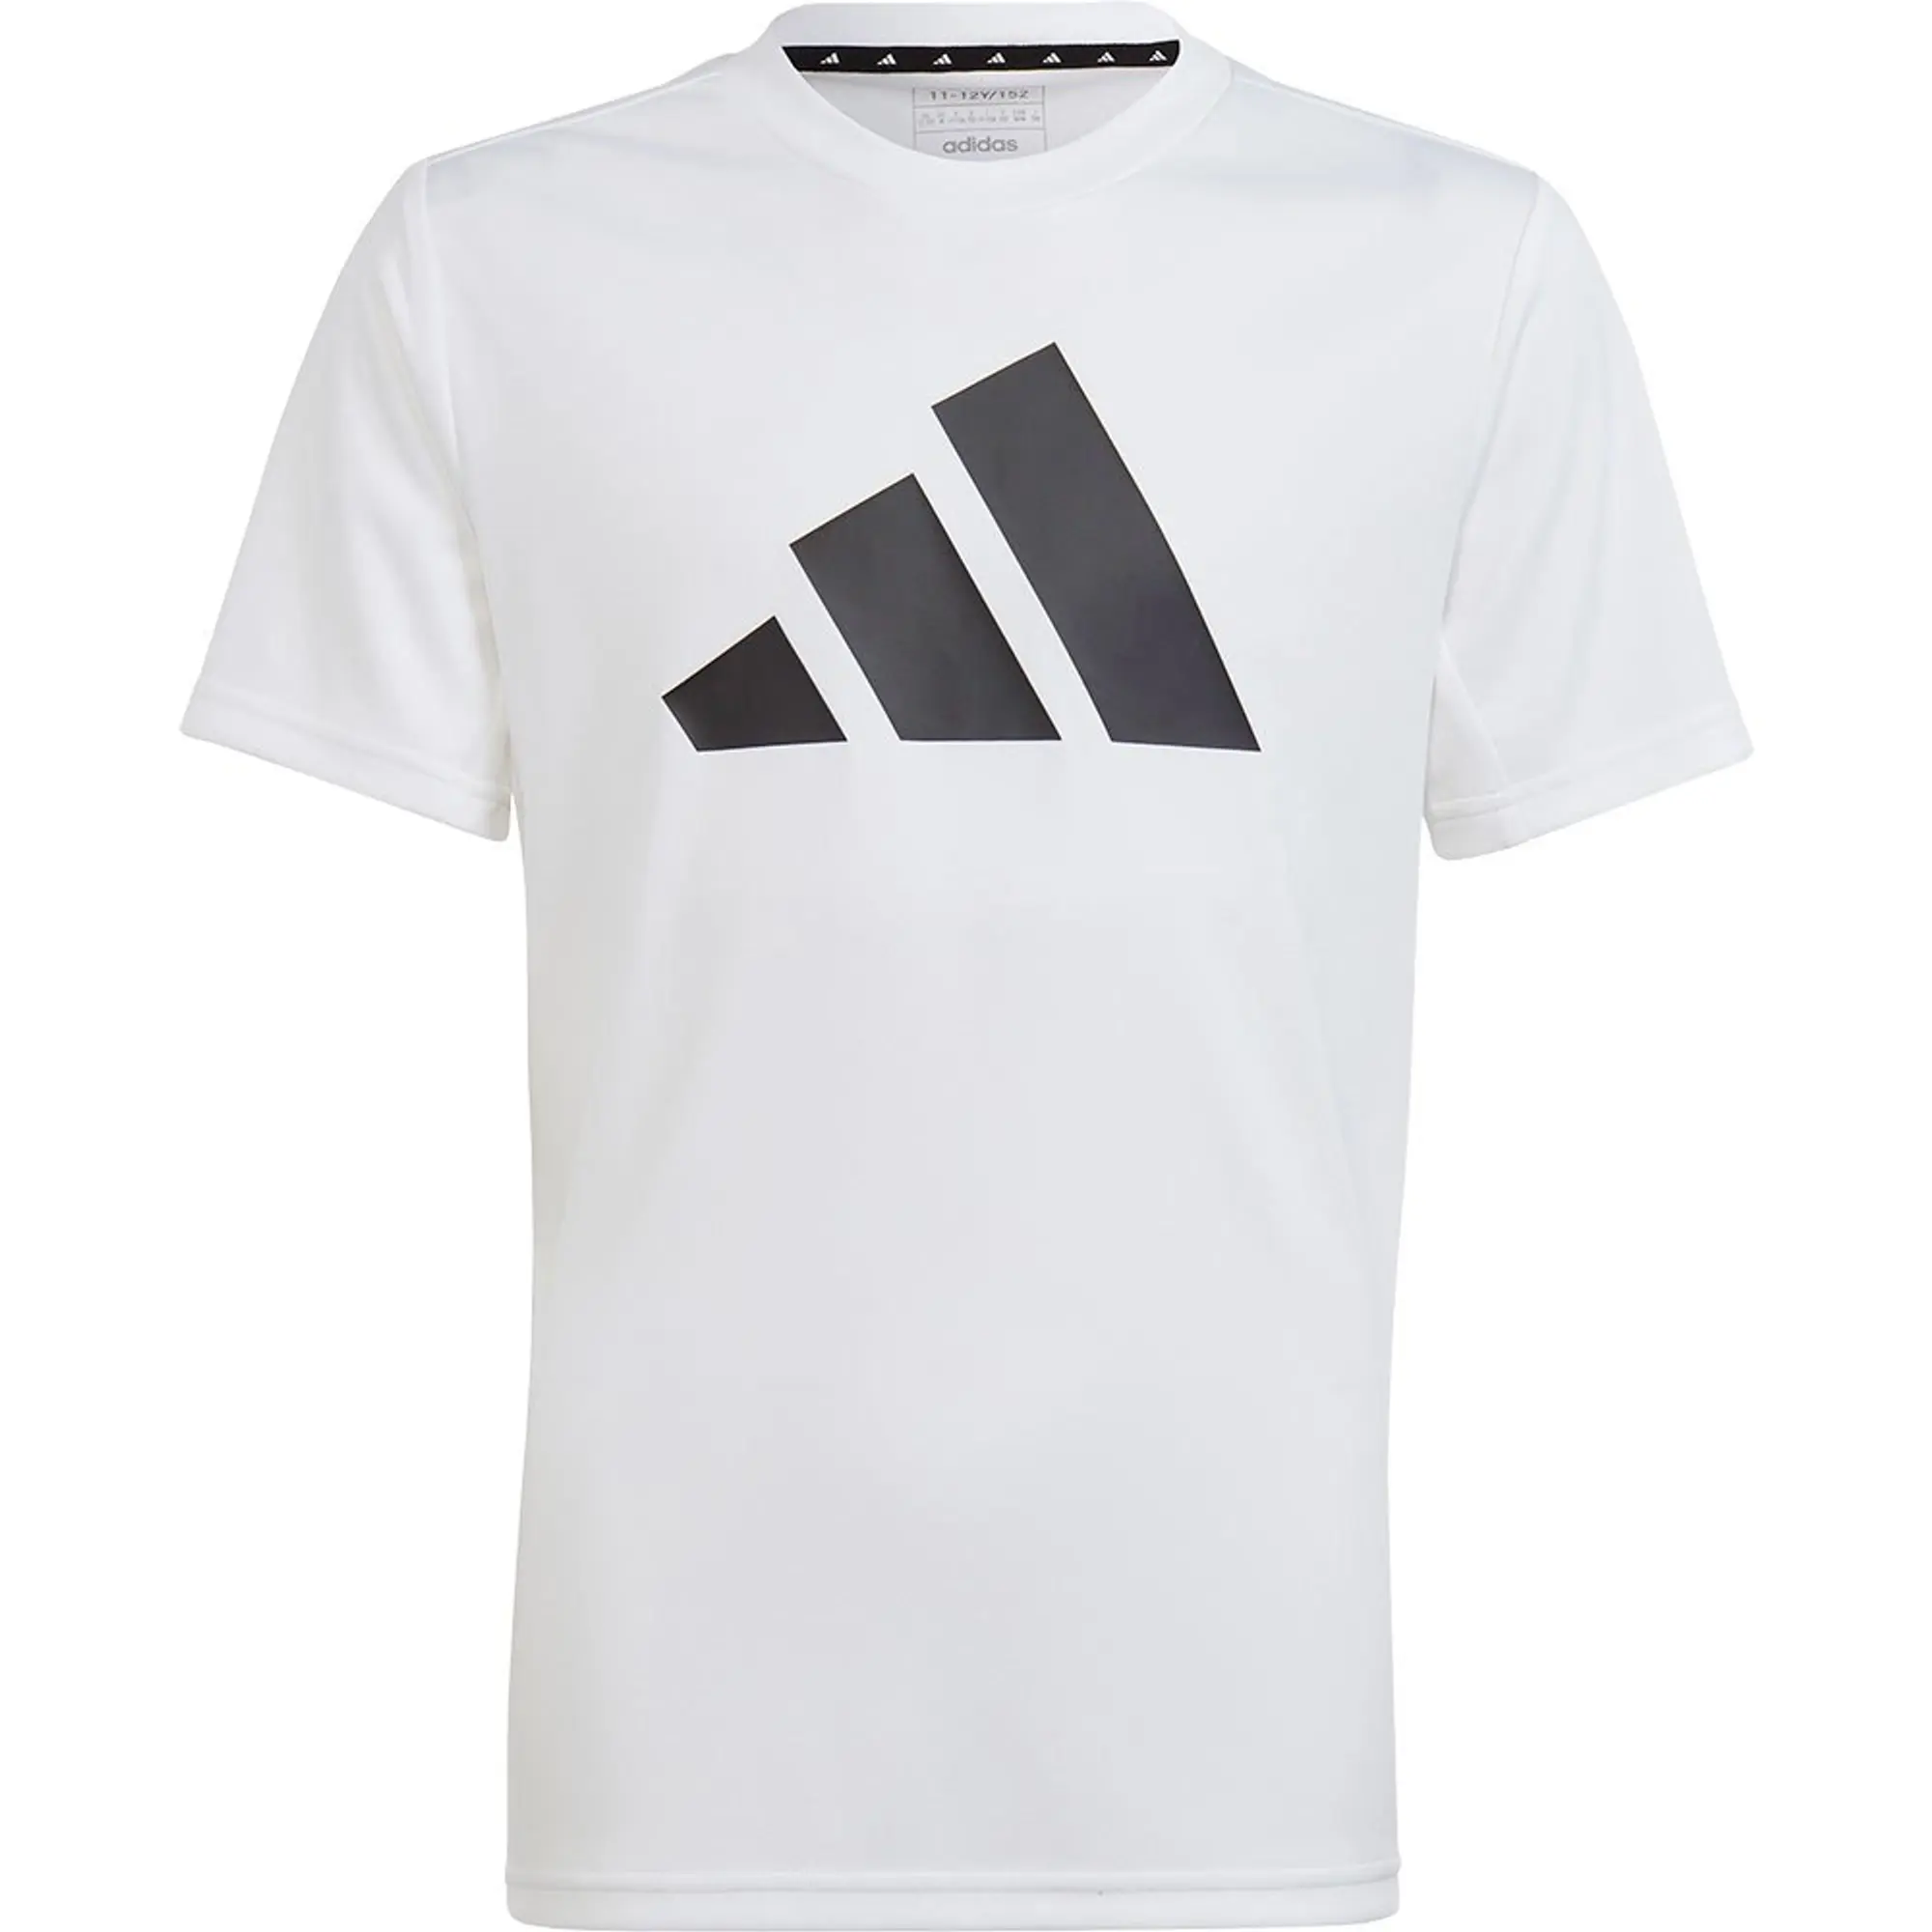 Boys, adidas Junior Unisex Train Essentials Logo Tee - White/Black, White/Black